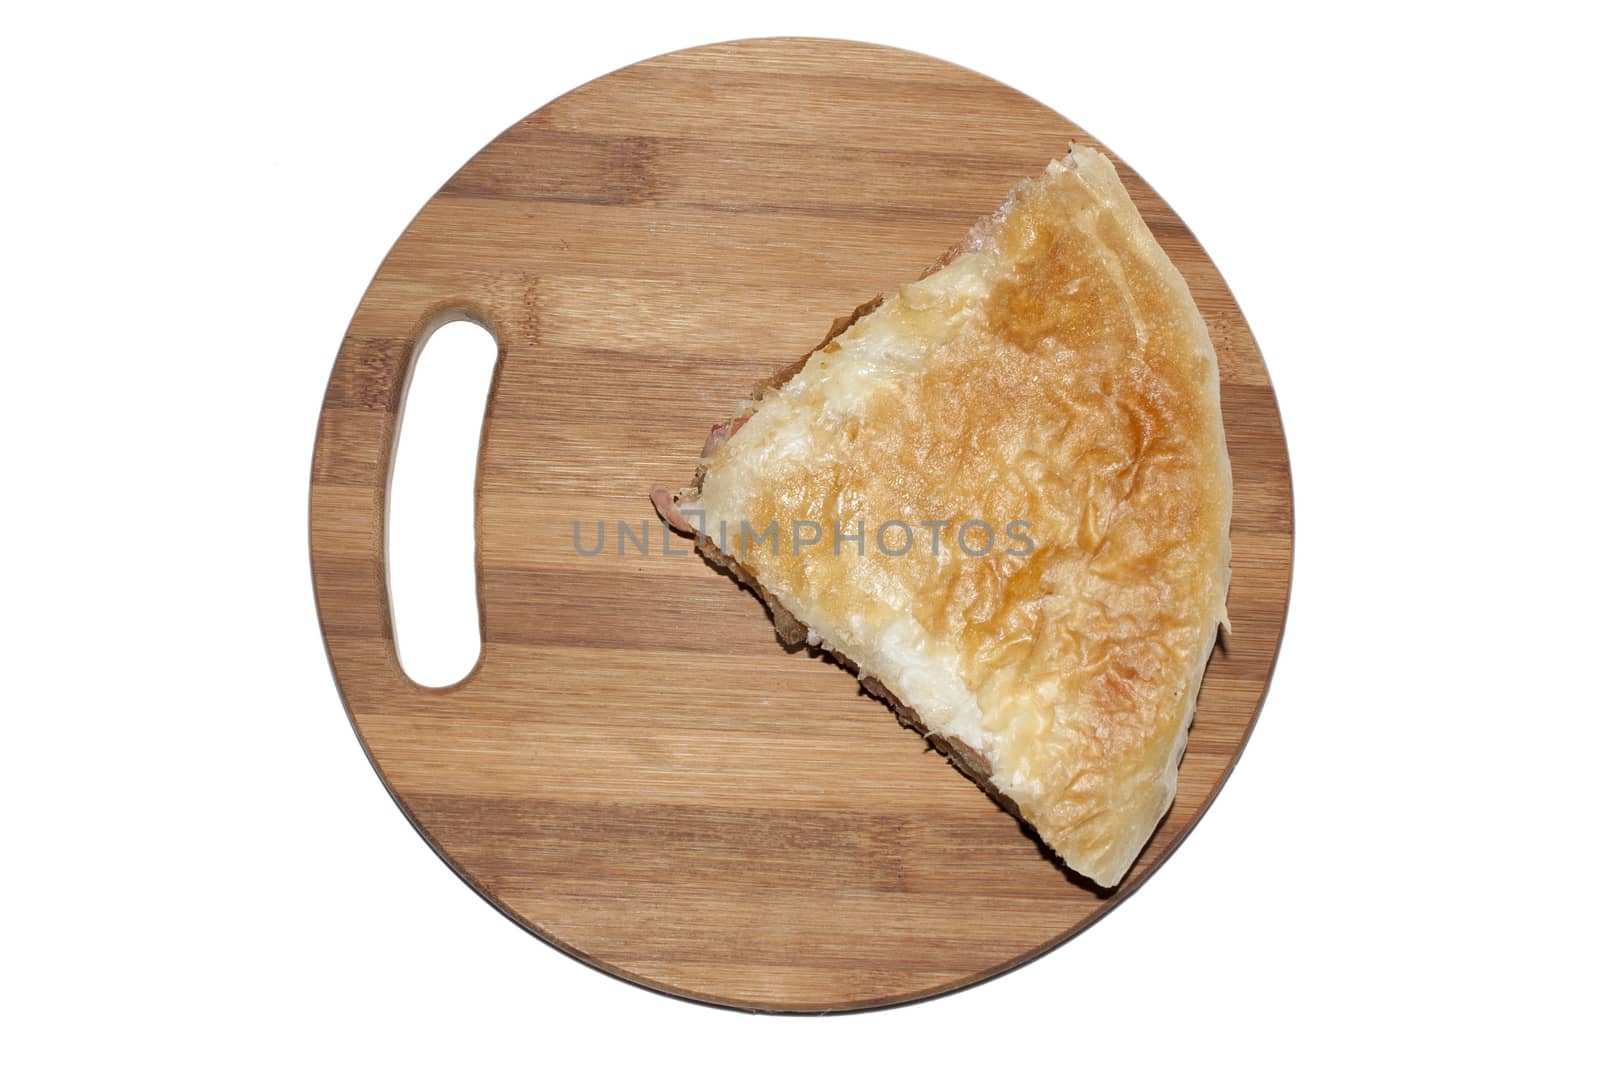 Balkan pie burek on the wooden board by zlajaphoto